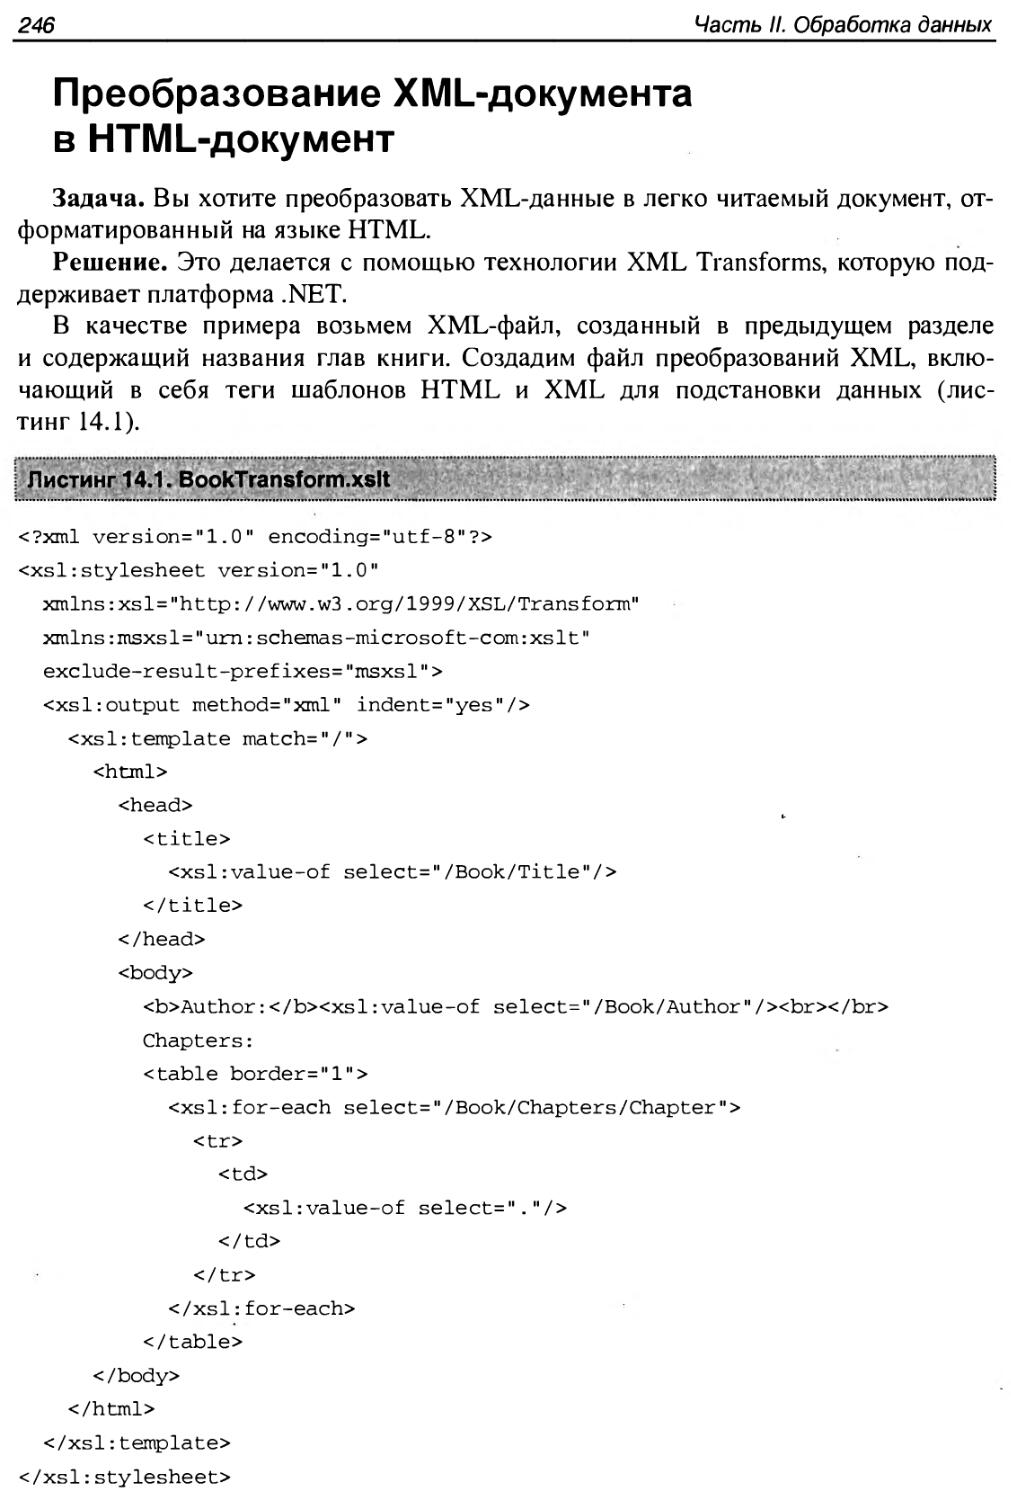 Преобразование XML-документа в HTML-документ